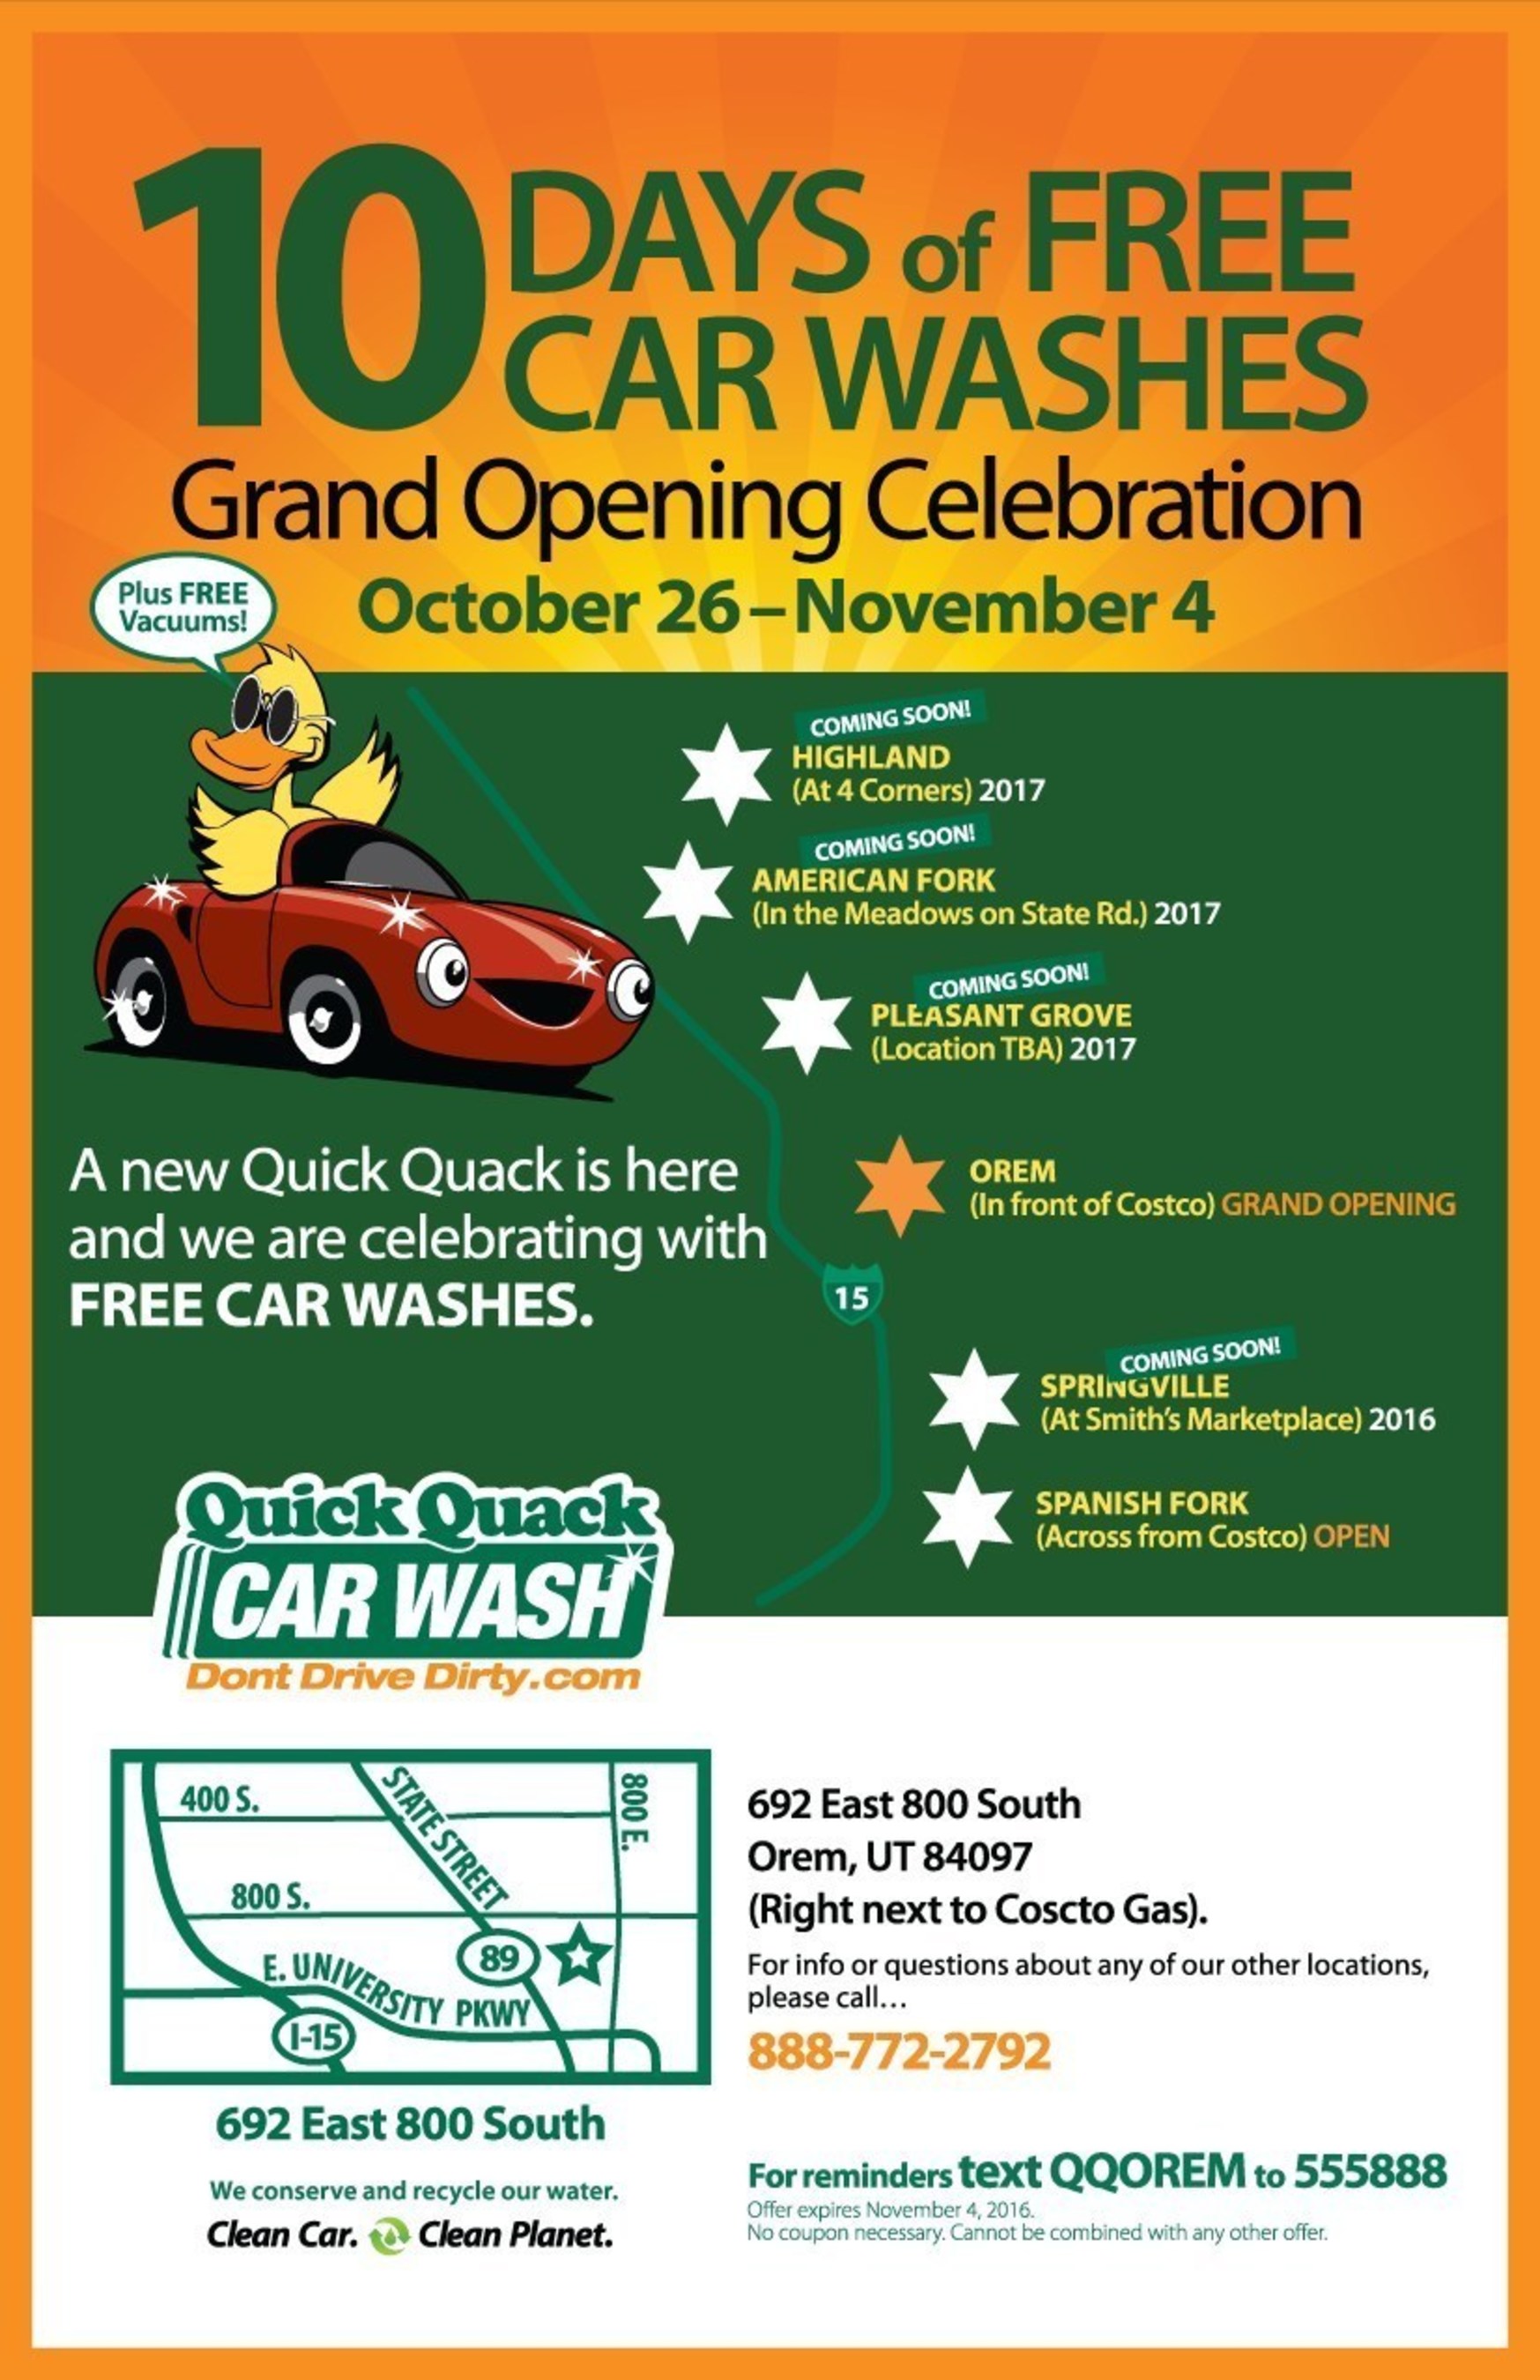 Quick Quack Car Wash Celebrates Grand Opening Of New Orem Location With